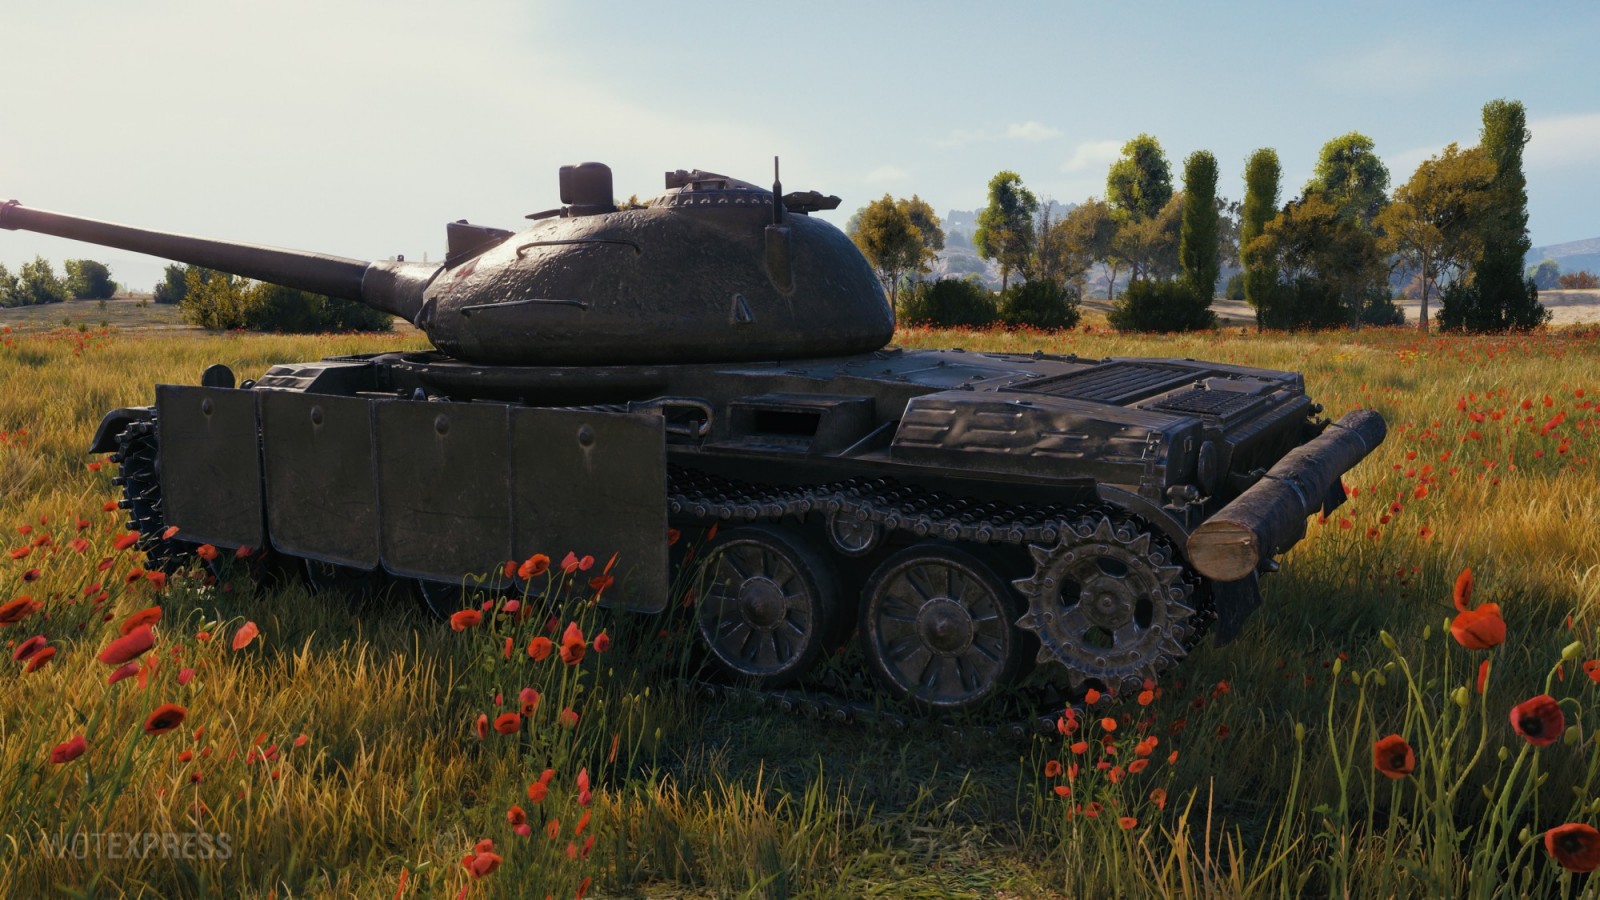 Скриншоты танка CS-59 в HD из тесте 1.10 World of Tanks.